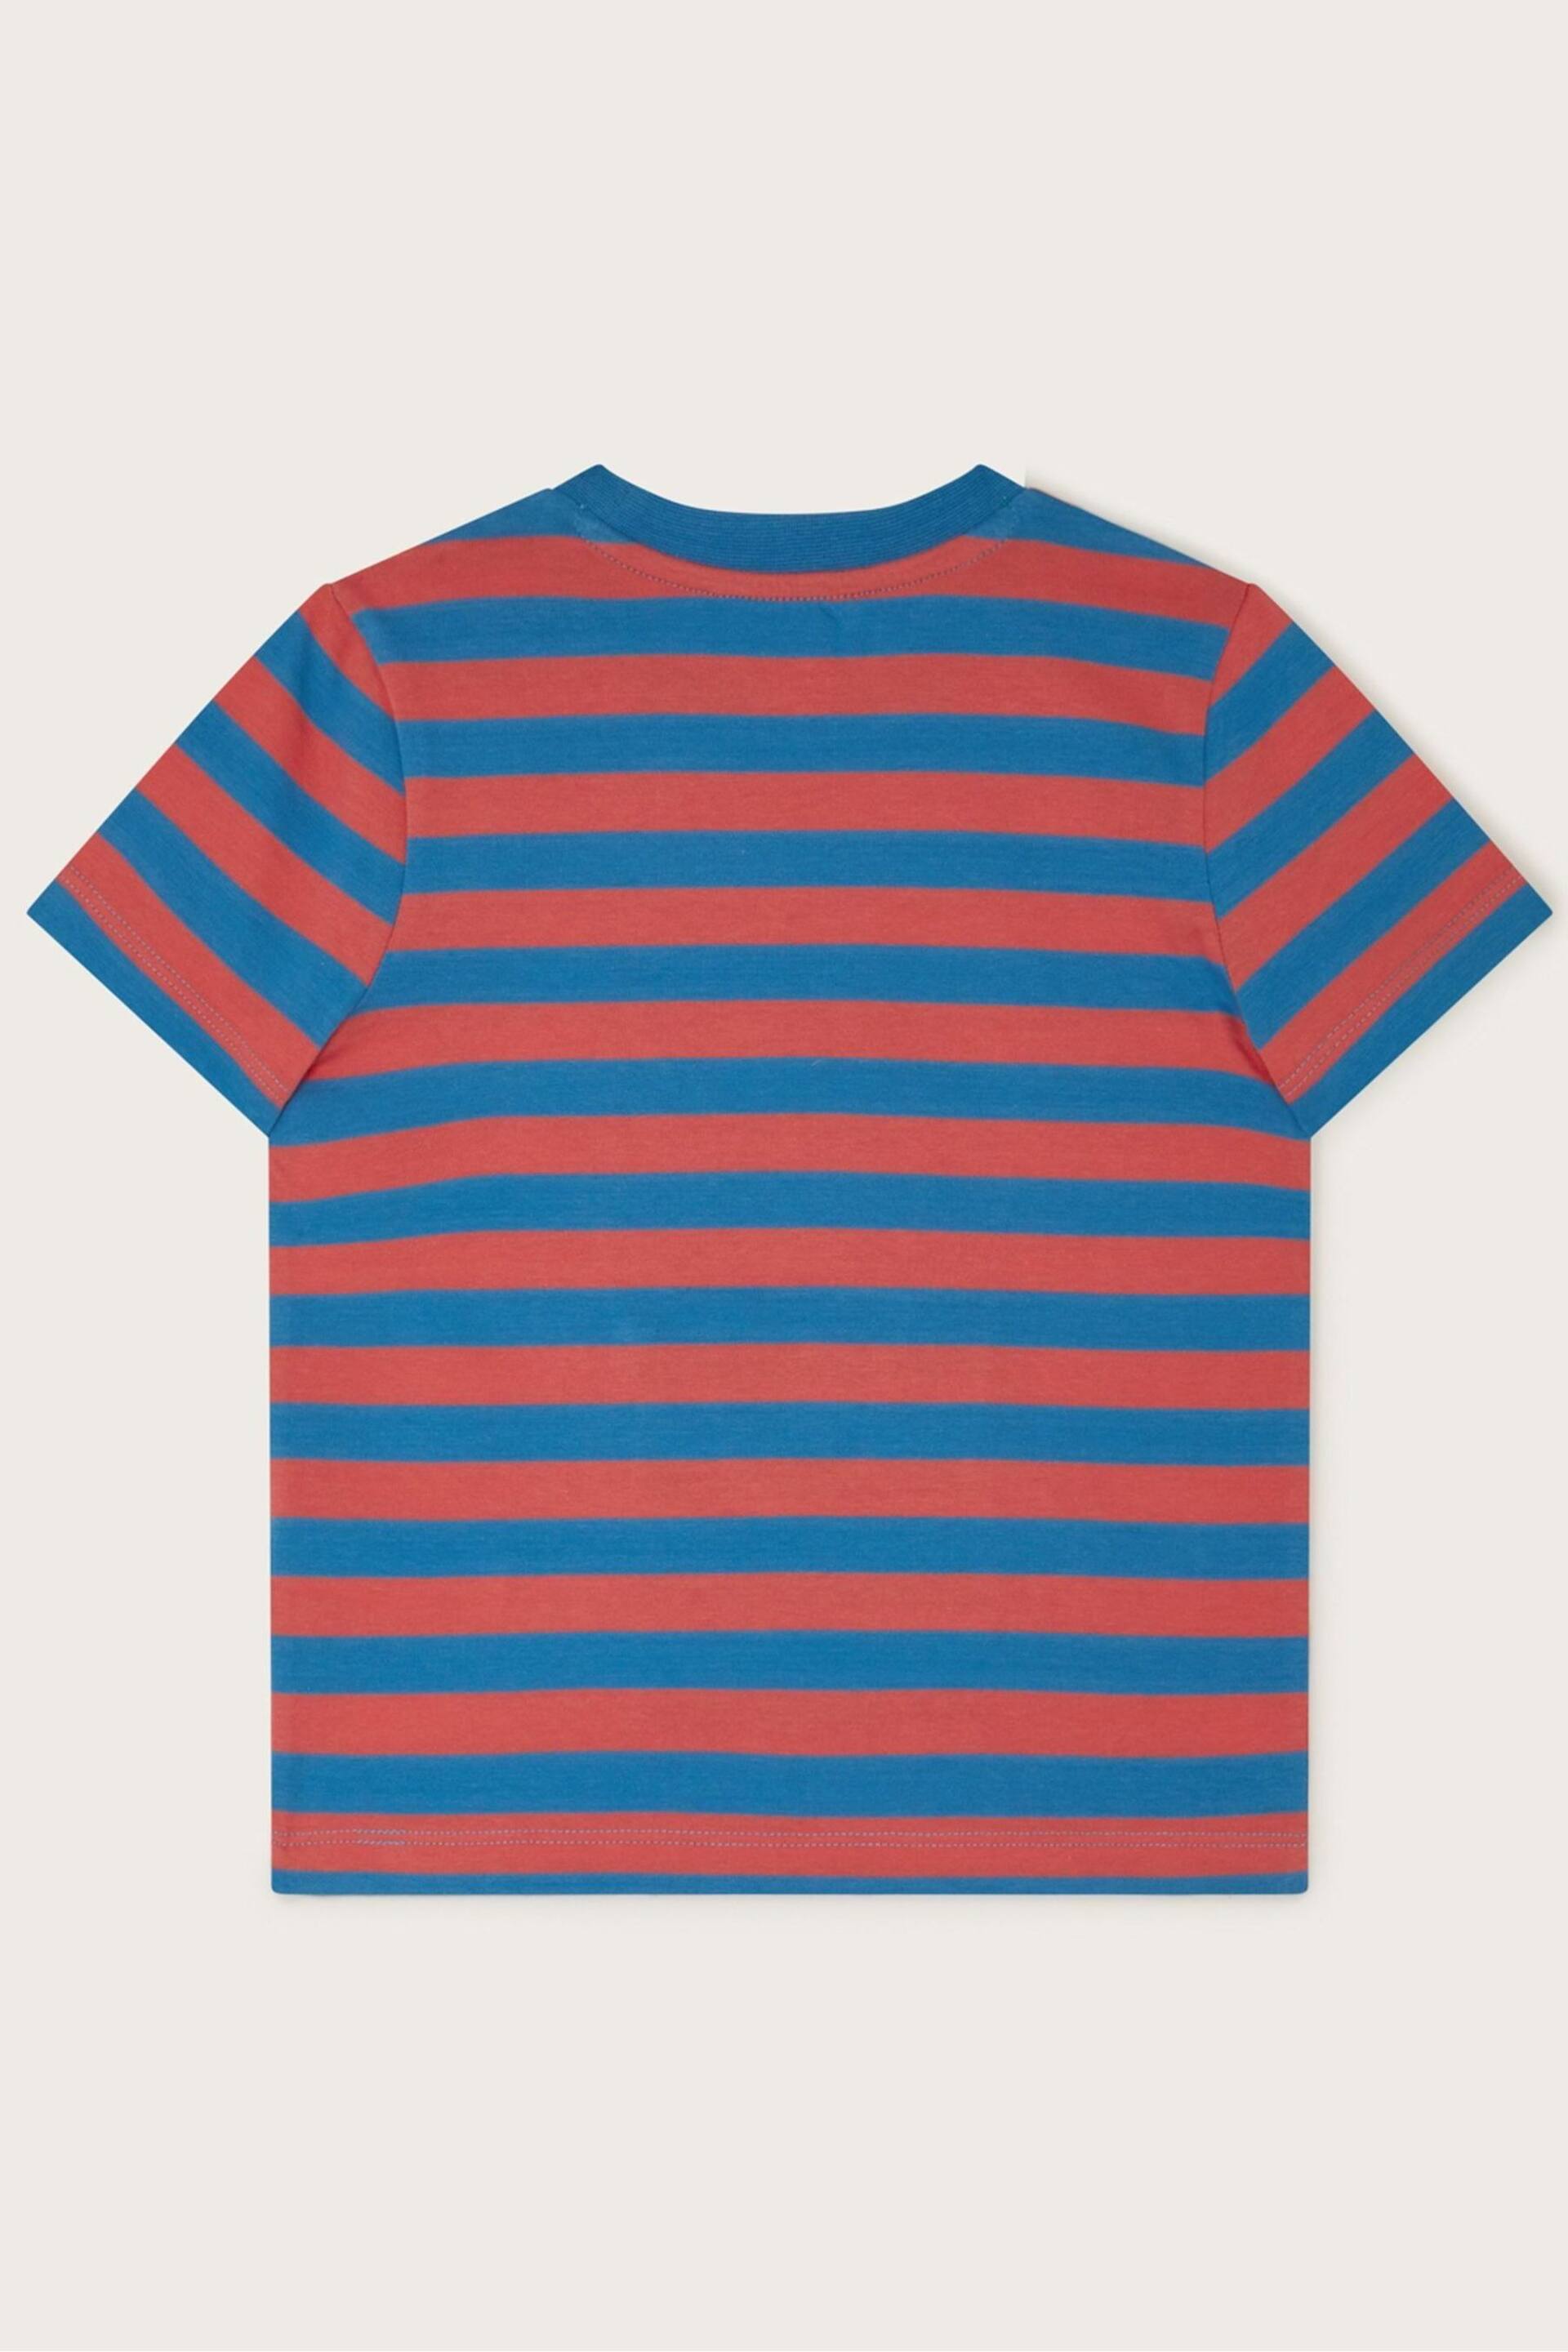 Monsoon Blue Frog Stripe T-Shirt - Image 2 of 3